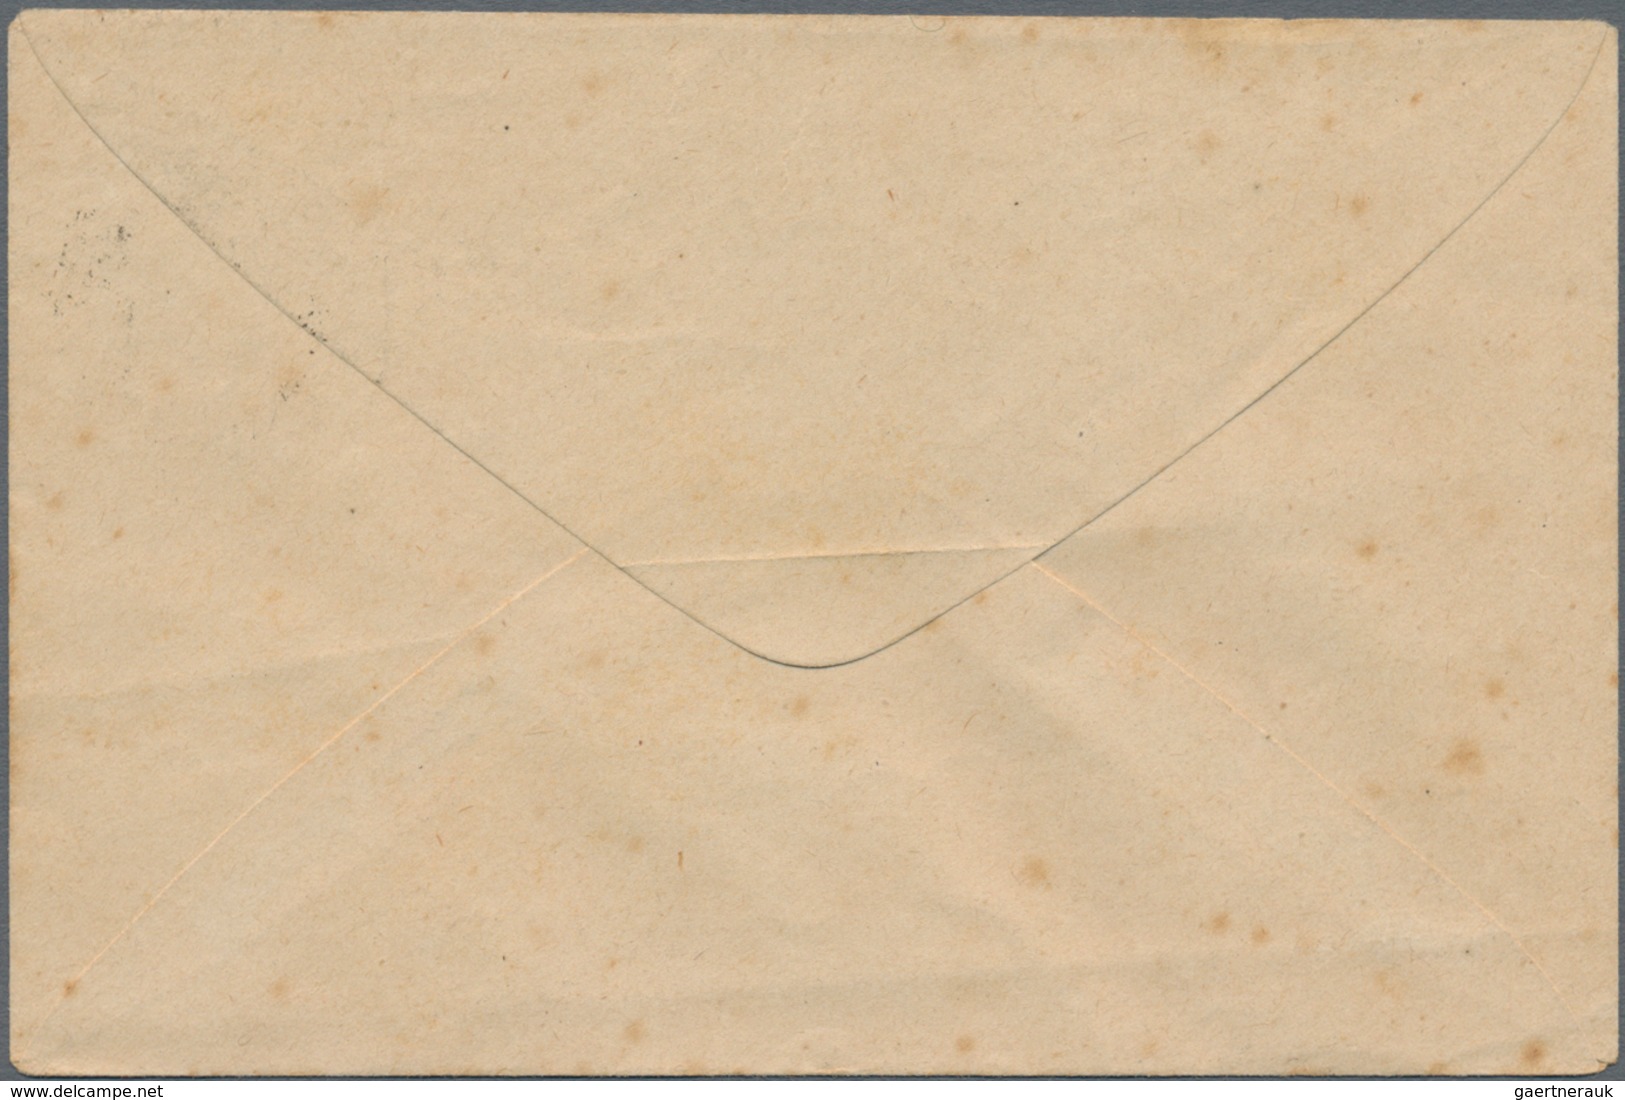 Kambodscha: 1892, Small Size Envelope Type Sage 5 C. Canc. "TAKEO 6 JANV 92" To Chaudoc, Stains. - Kambodscha